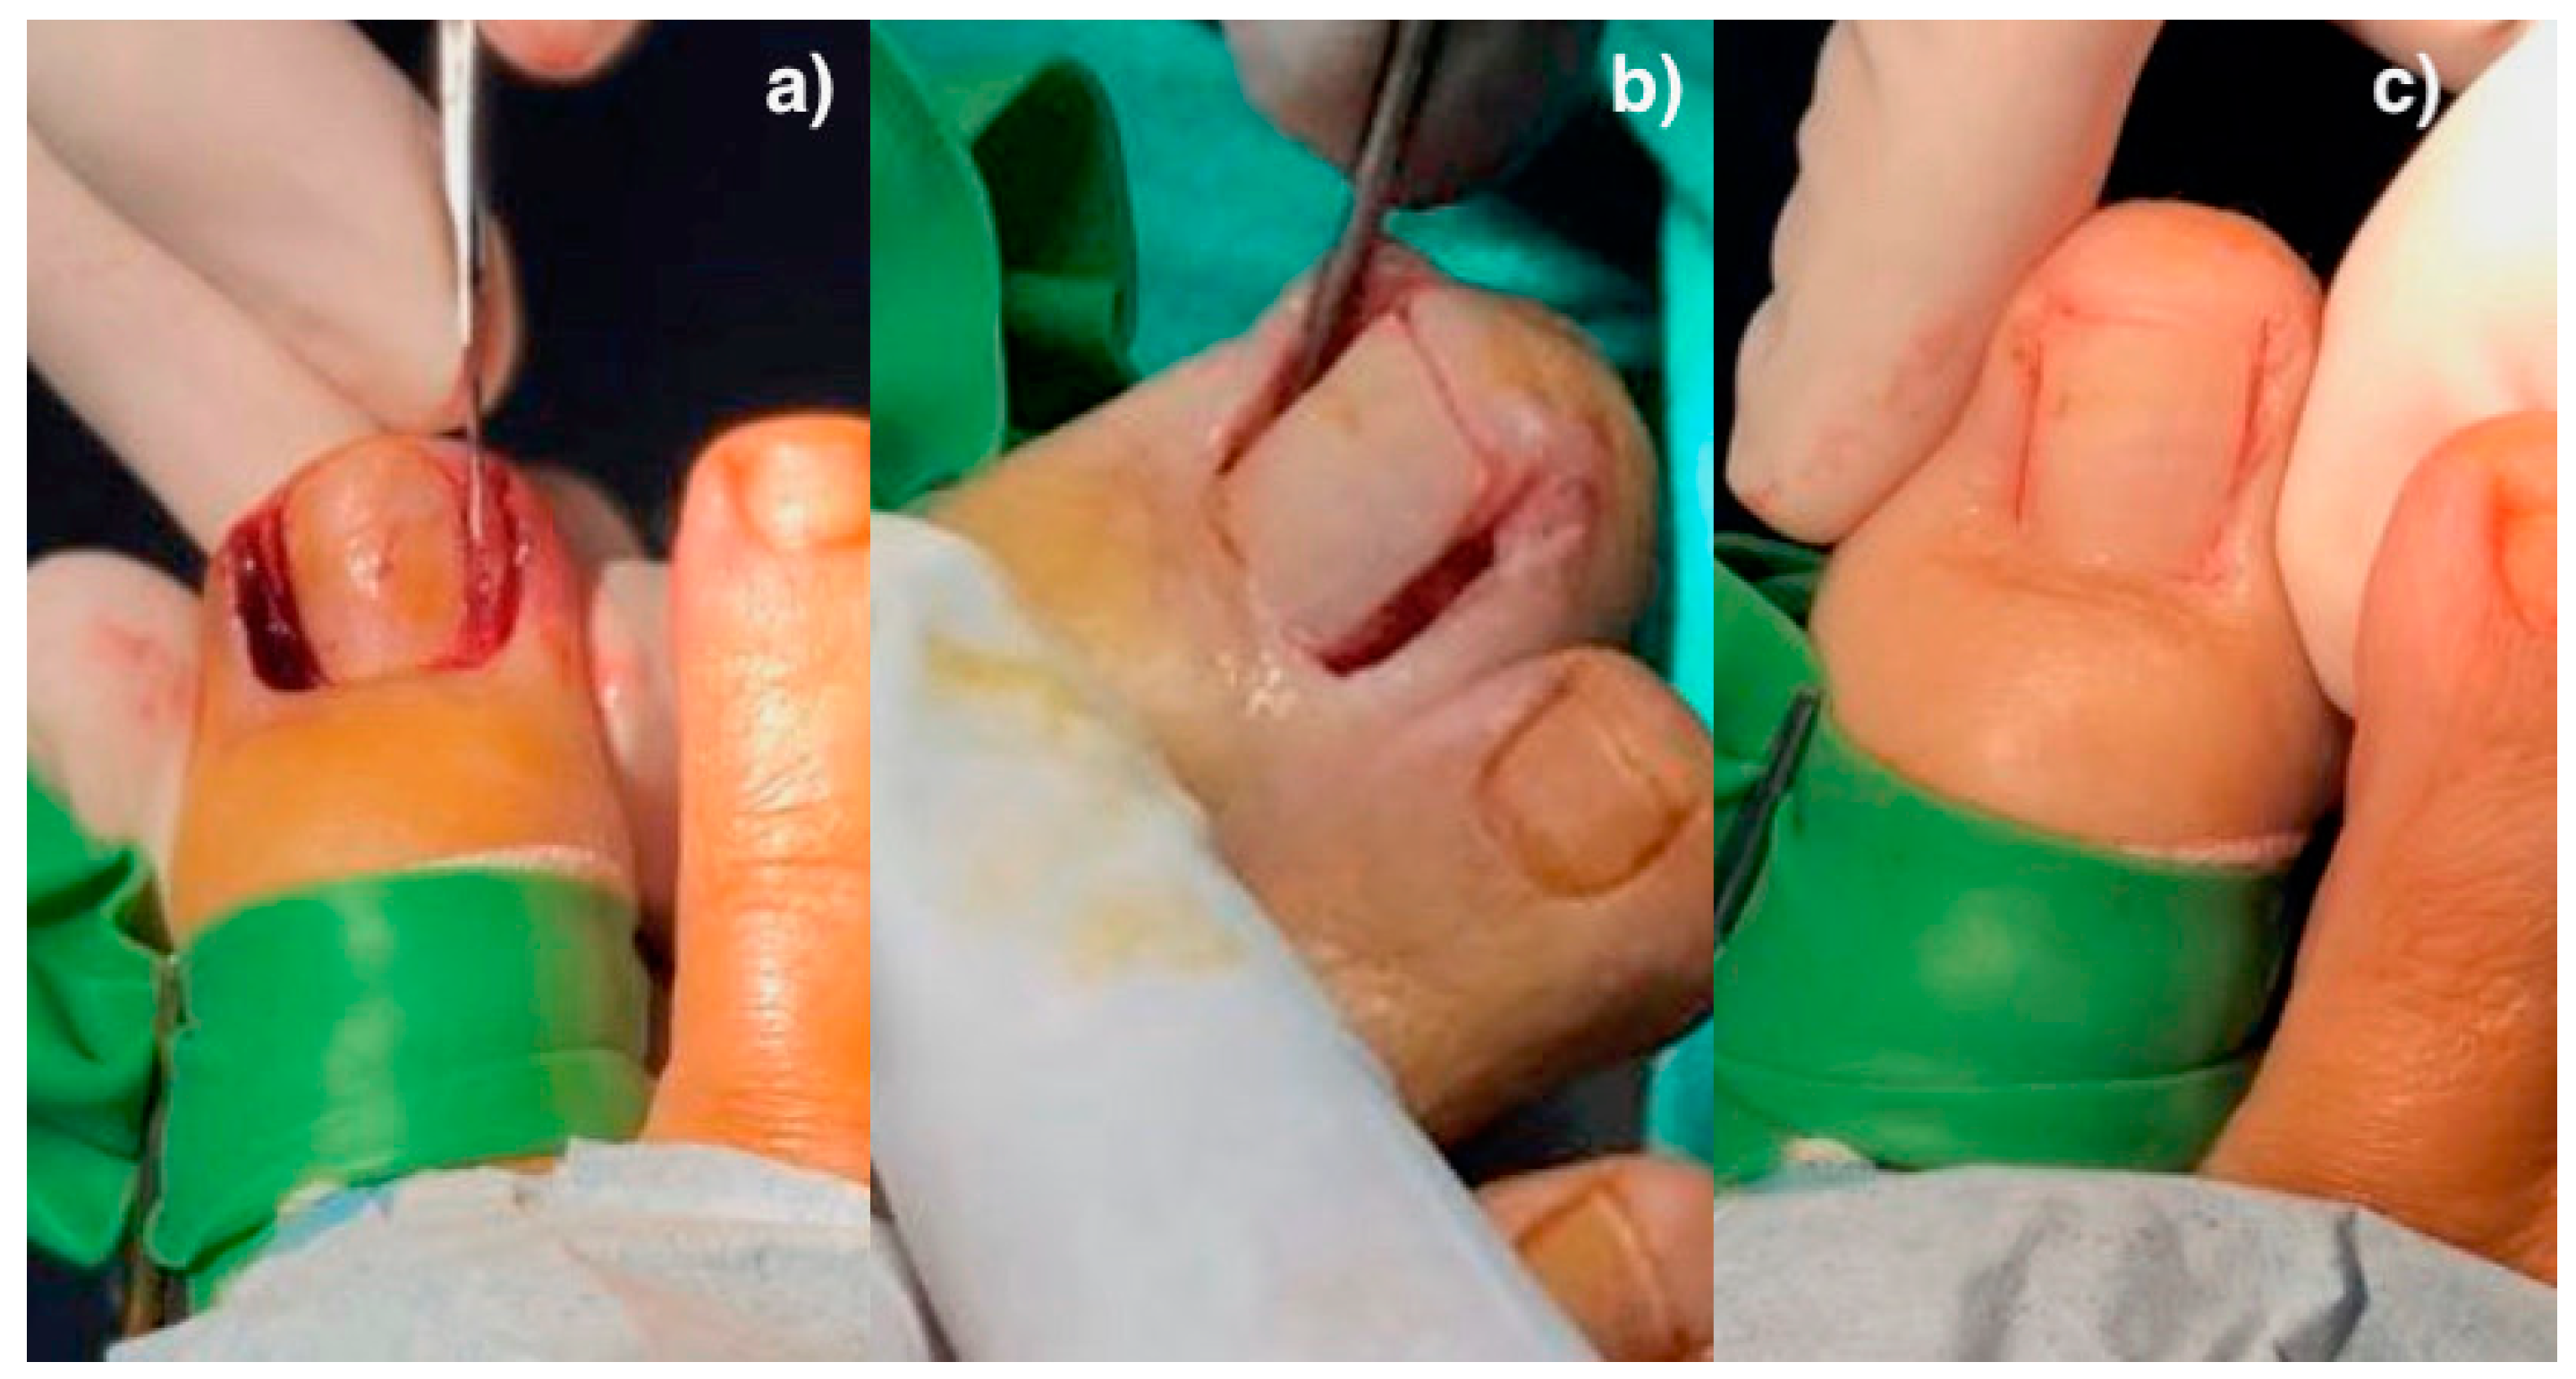 Ingrown Nails: Background, Pathophysiology, Etiology